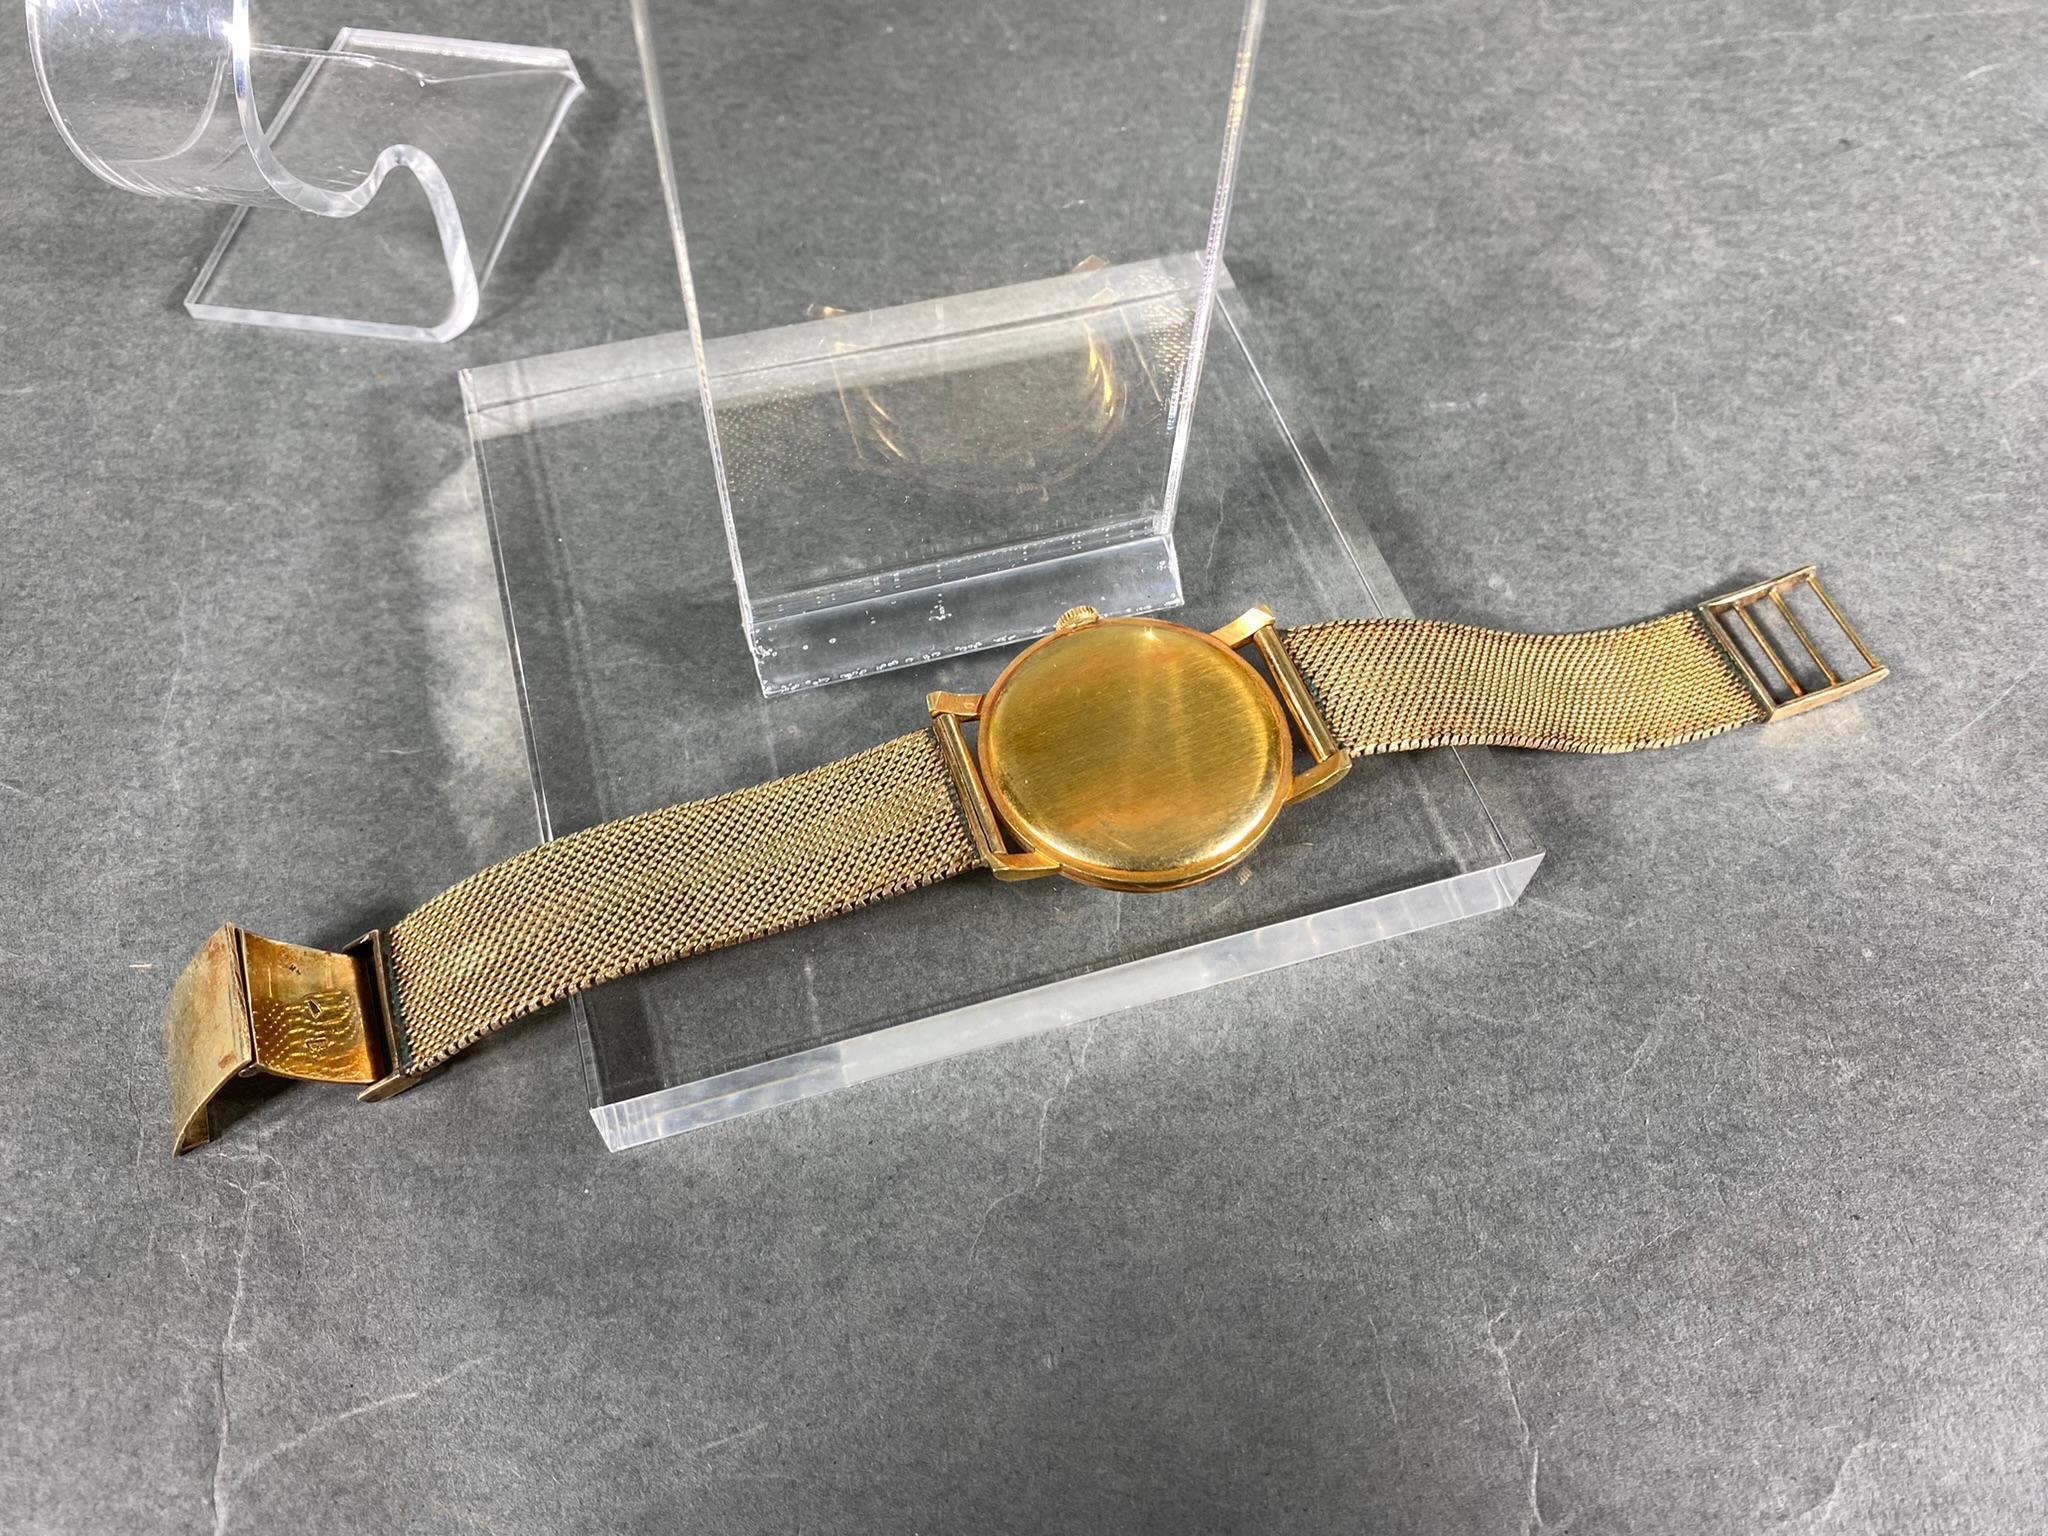 International Watch Co. Swiss Men's Watch 18k Gold Case & Mesh Band